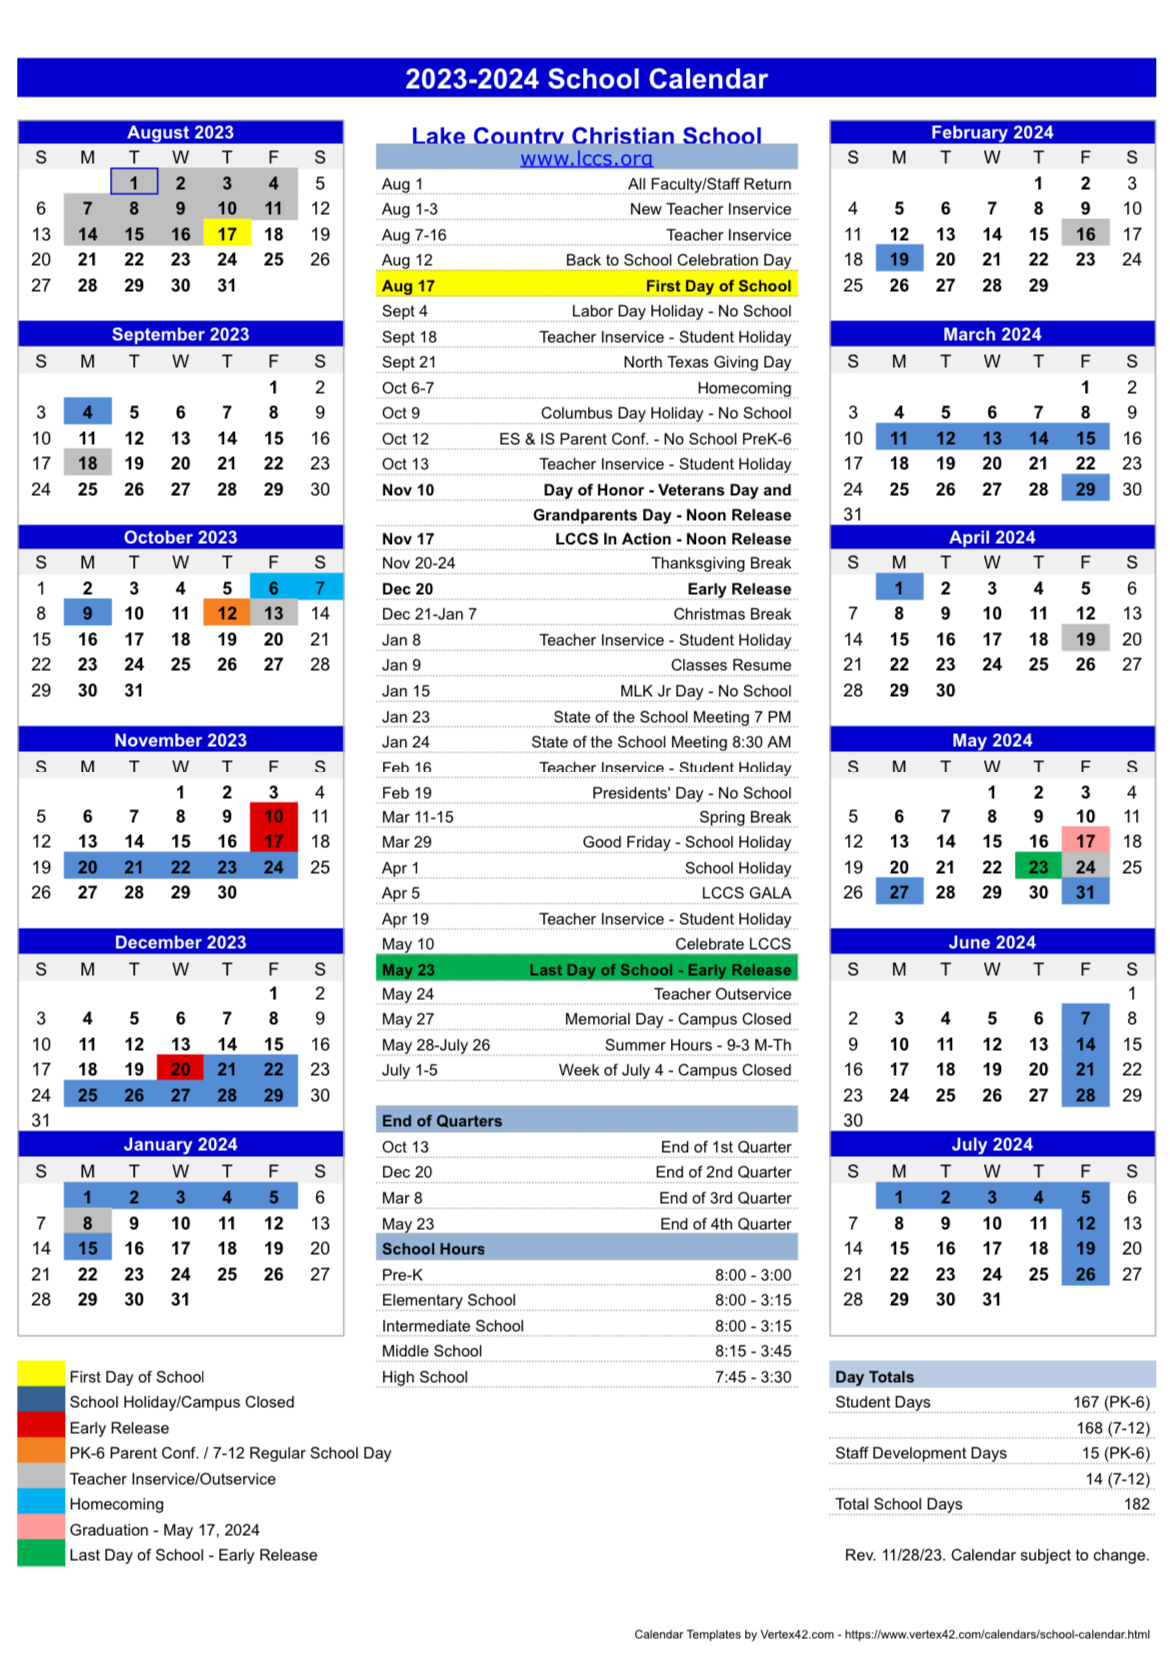 Calendar - Lake Country Christian School